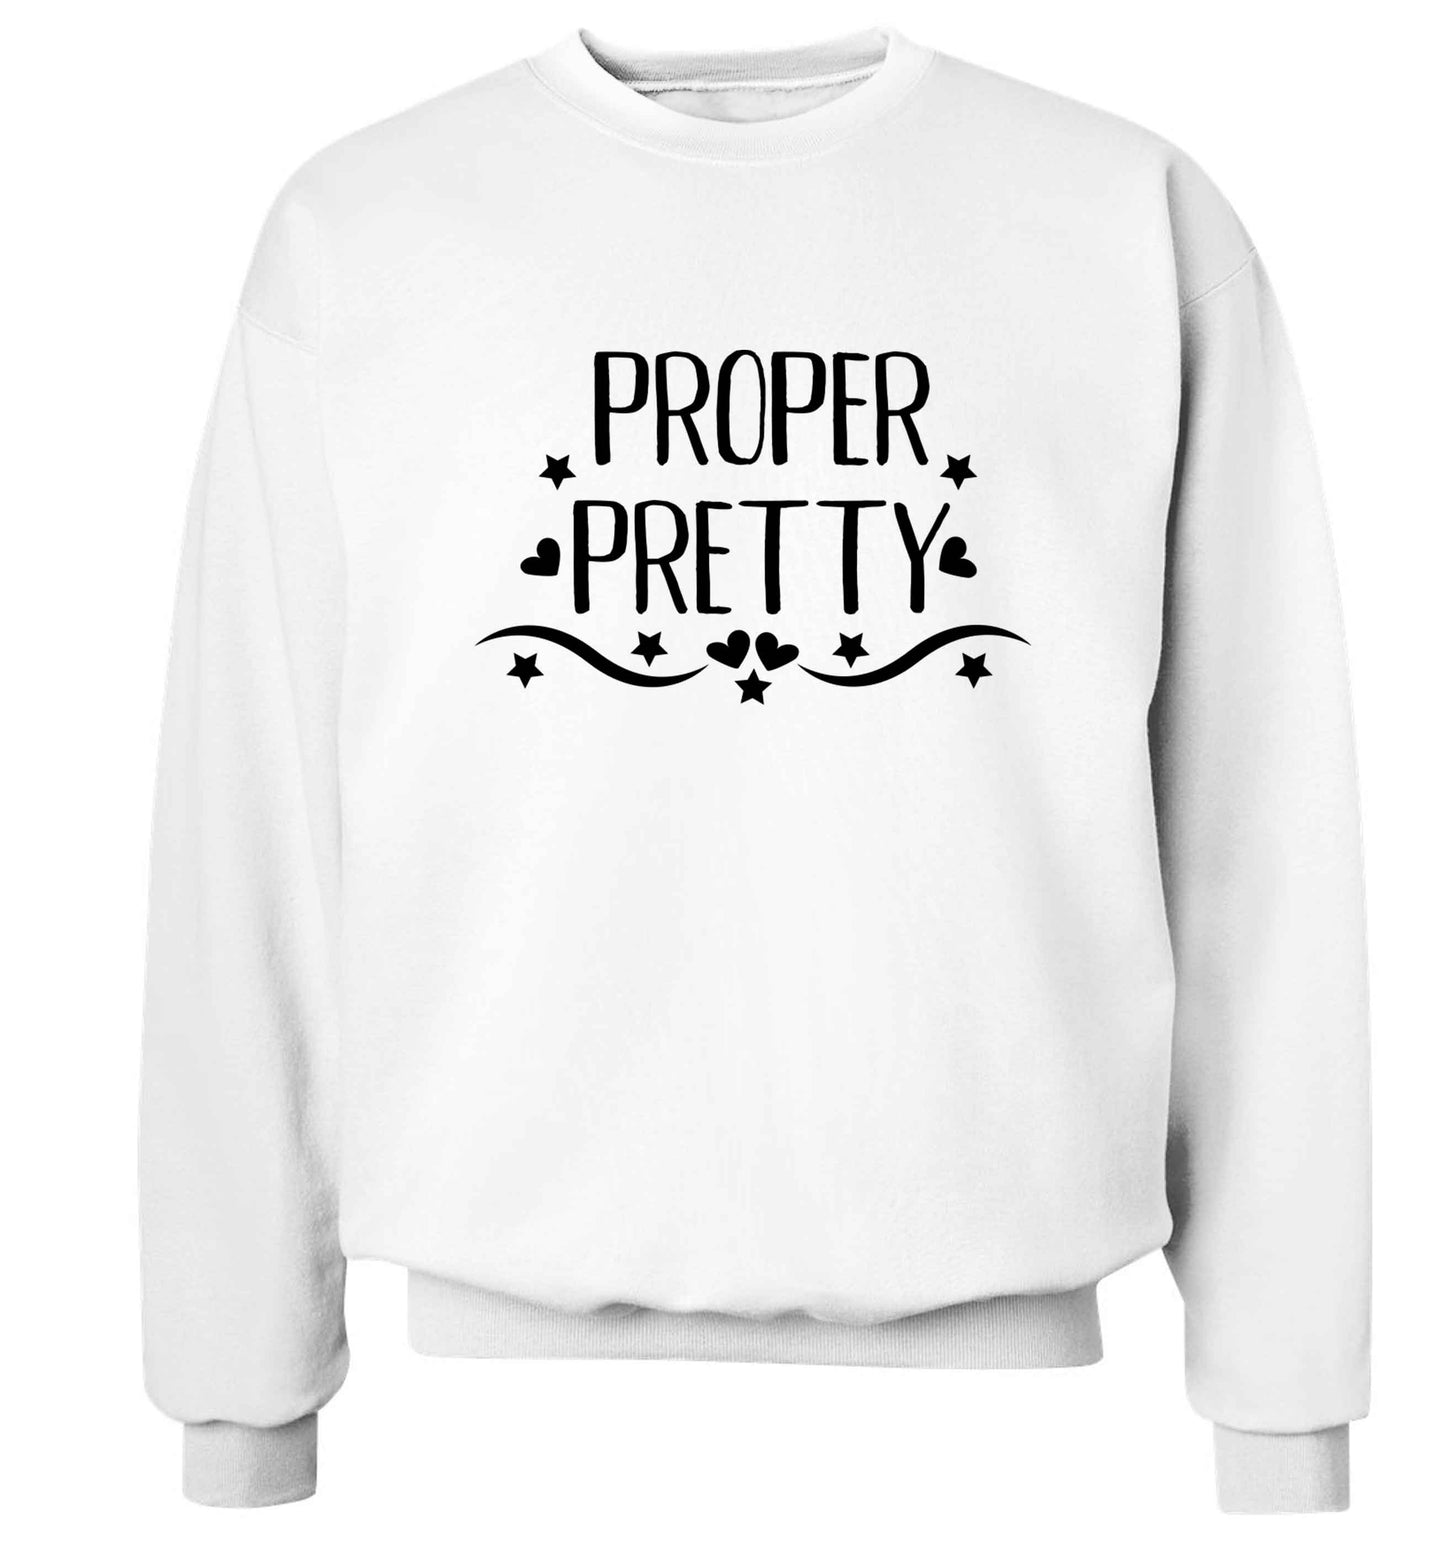 Proper pretty Adult's unisex white Sweater 2XL